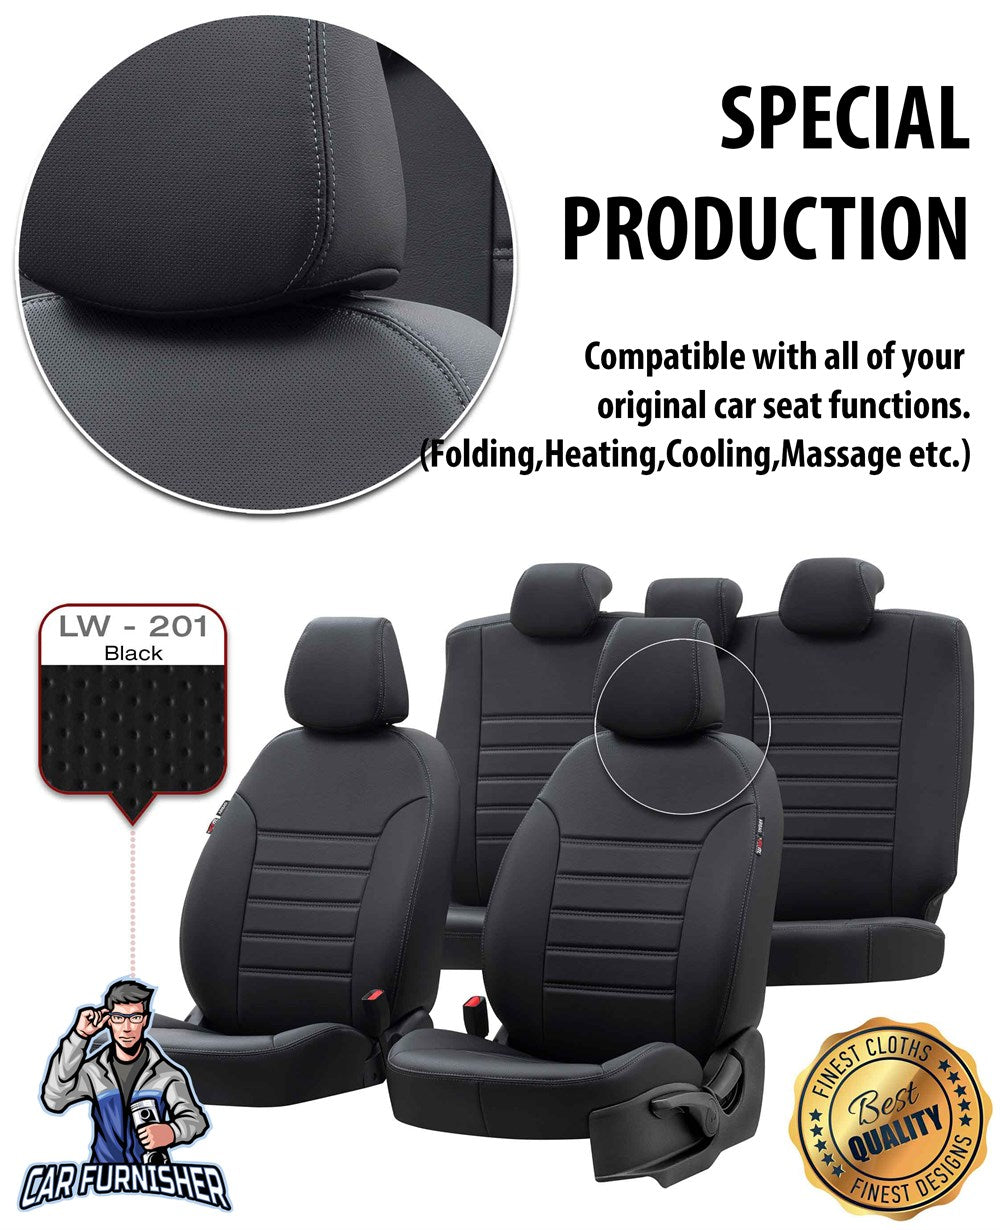 Daihatsu Terios Seat Covers Istanbul Leather Design Burgundy Leather